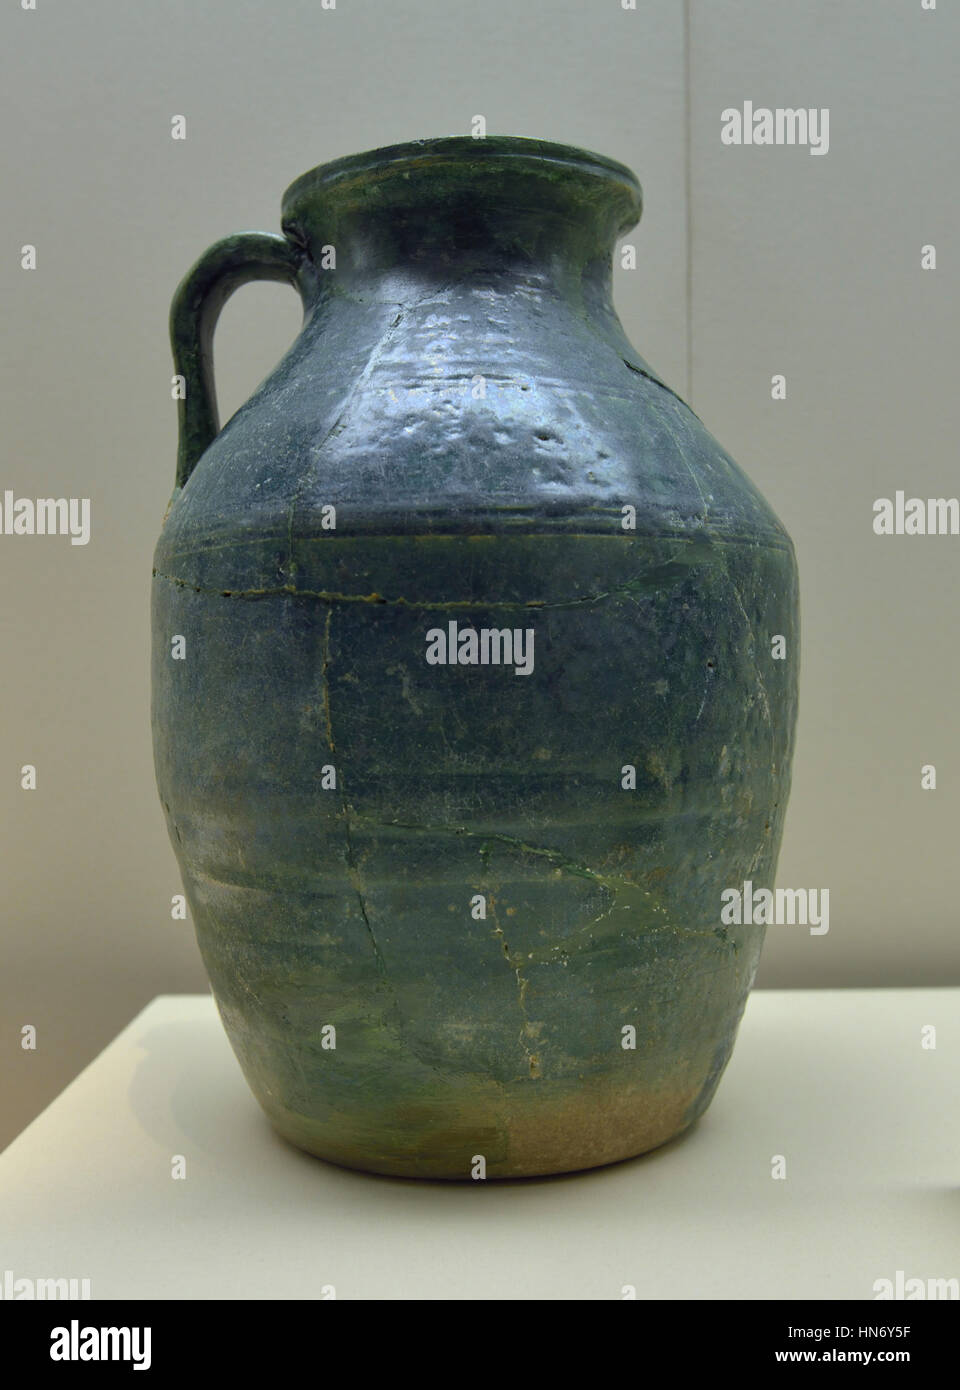 Vaso. Qaryat al-FAW. Verde scuro e ceramica smaltata. Dipartimento di Archaecology, re Saud University, Riyahd. Arabia Saudita. Foto Stock